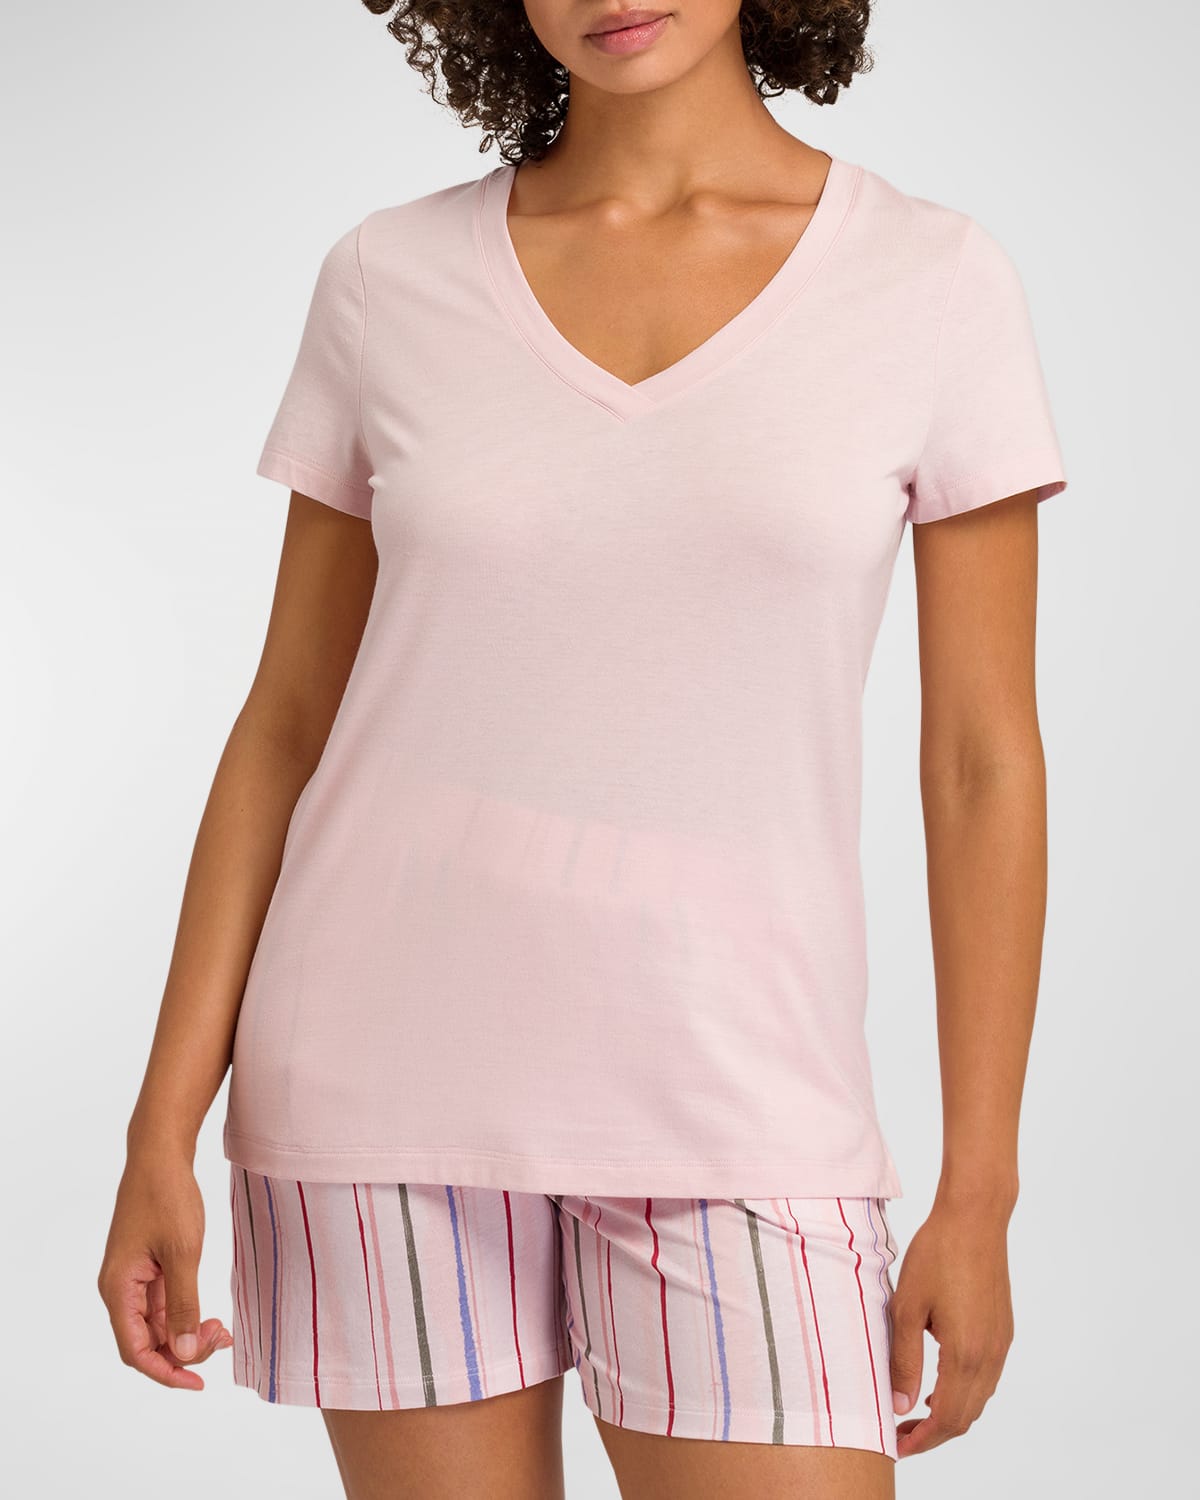 Hanro Women's Sleep & Lounge Single Jersey Short Sleeve T-shirt Pink